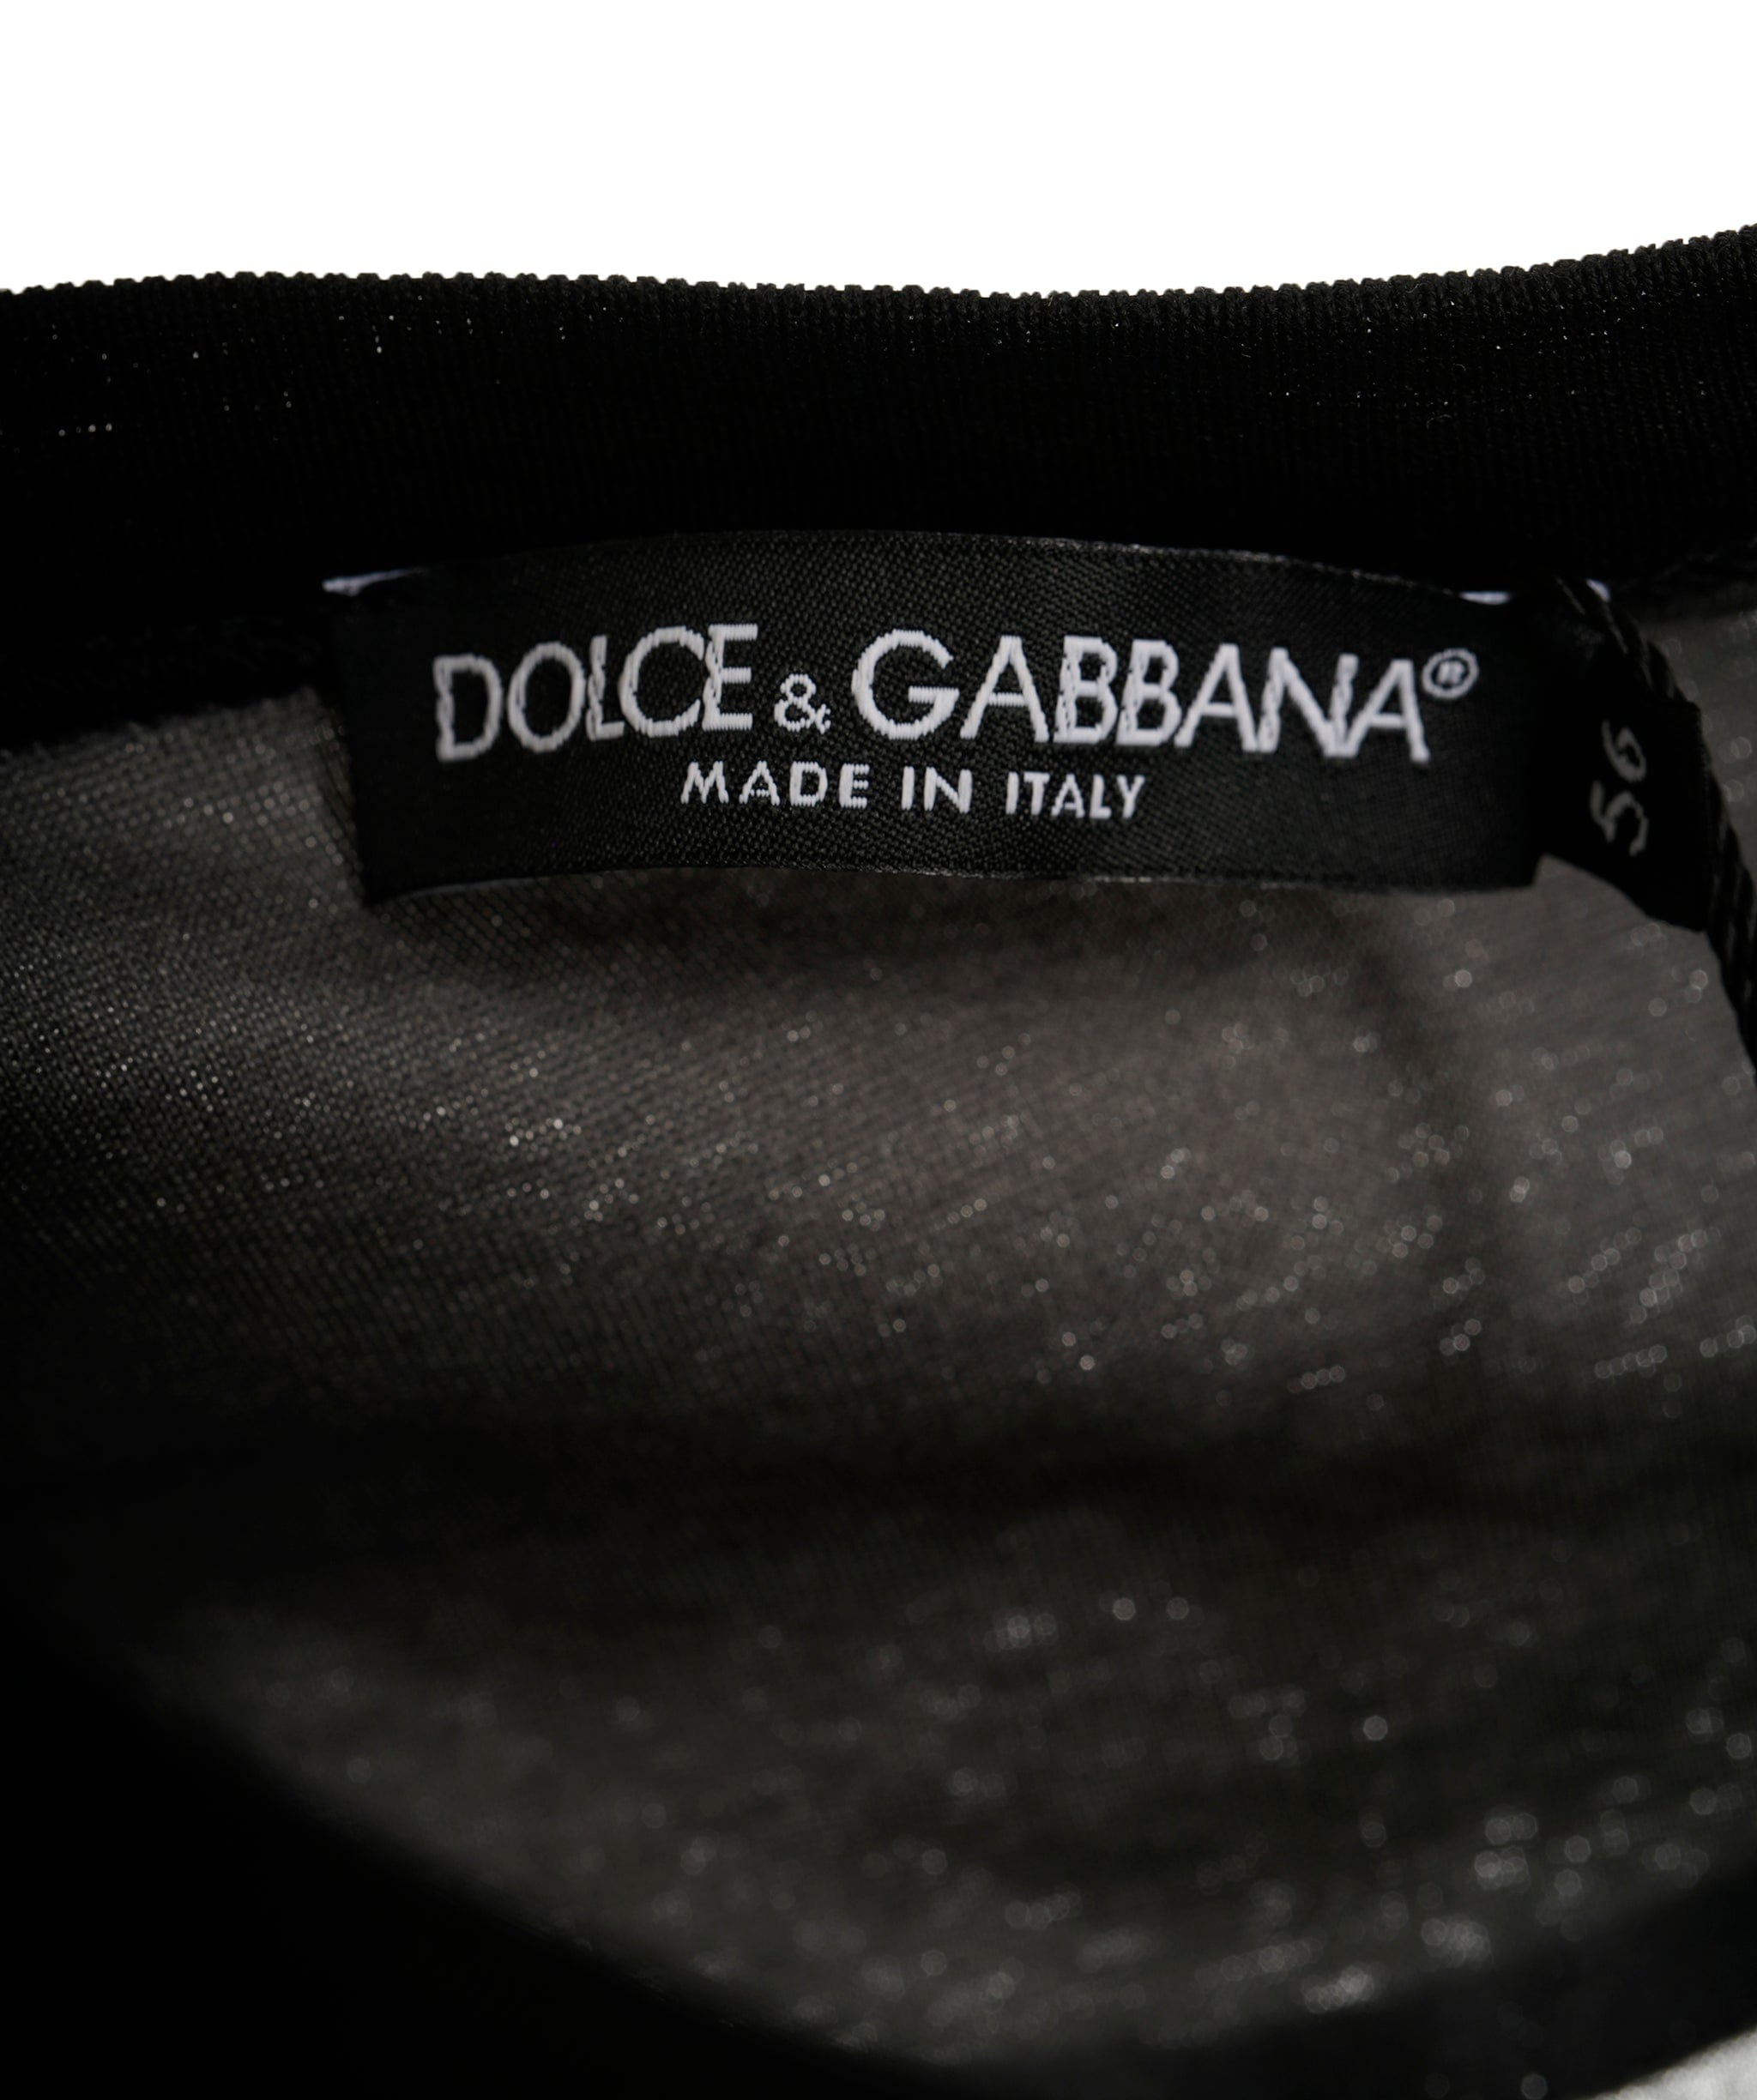 Dolce & Gabbana Dolce & Gabbana T-Shirt Black and Grey Stripe with floral design Size 56 AVC1765